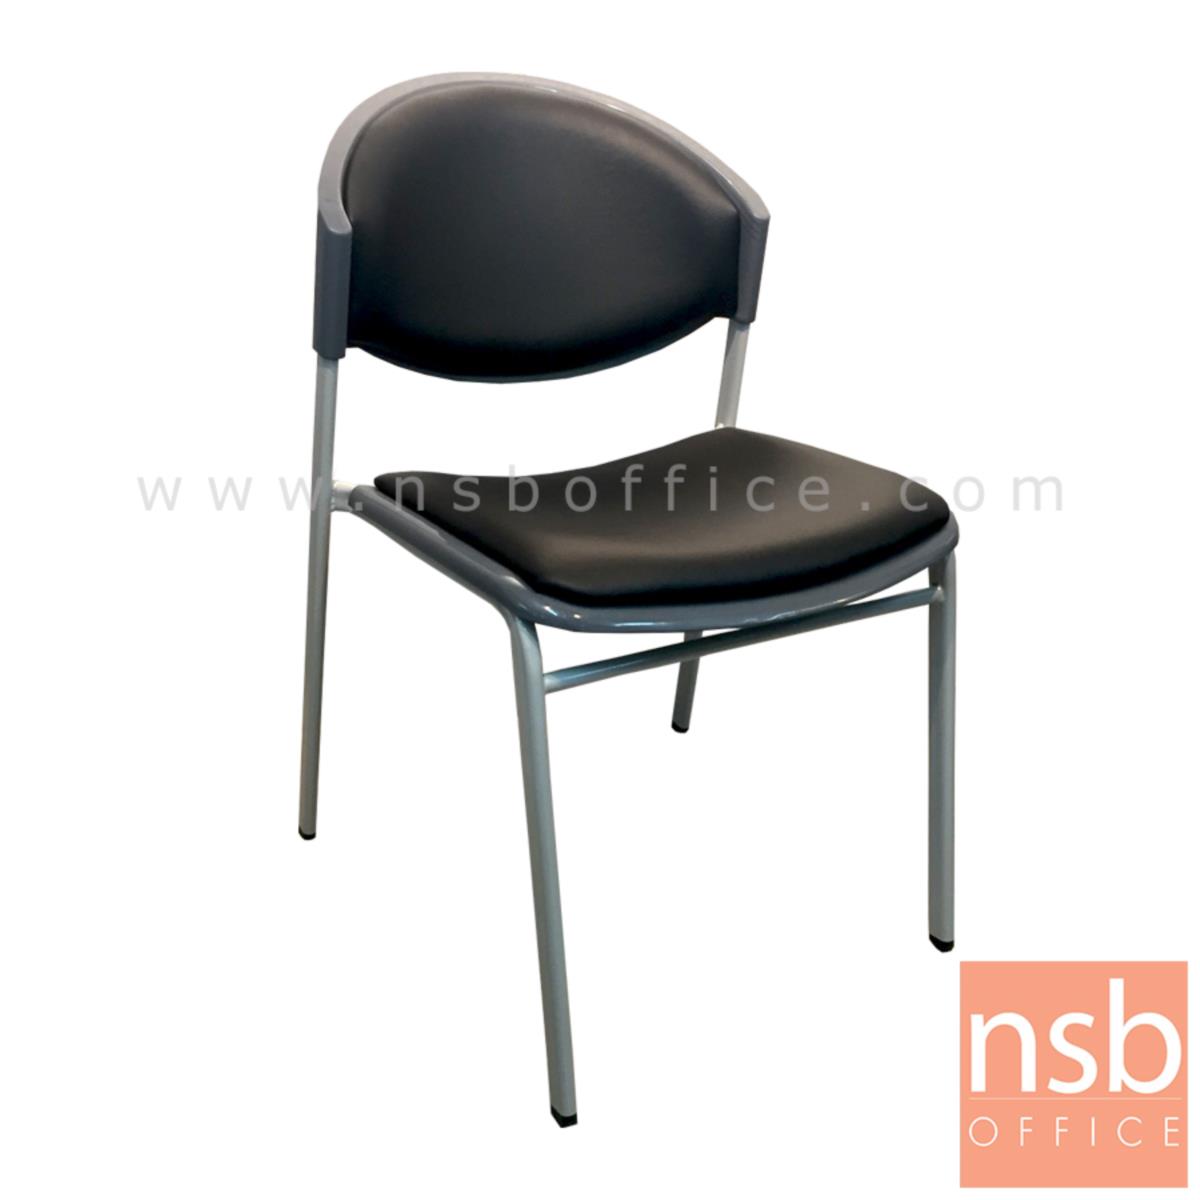 B05A030:เก้าอี้อเนกประสงค์เฟรมโพลี่ รุ่น A3-970  ขาเหล็ก